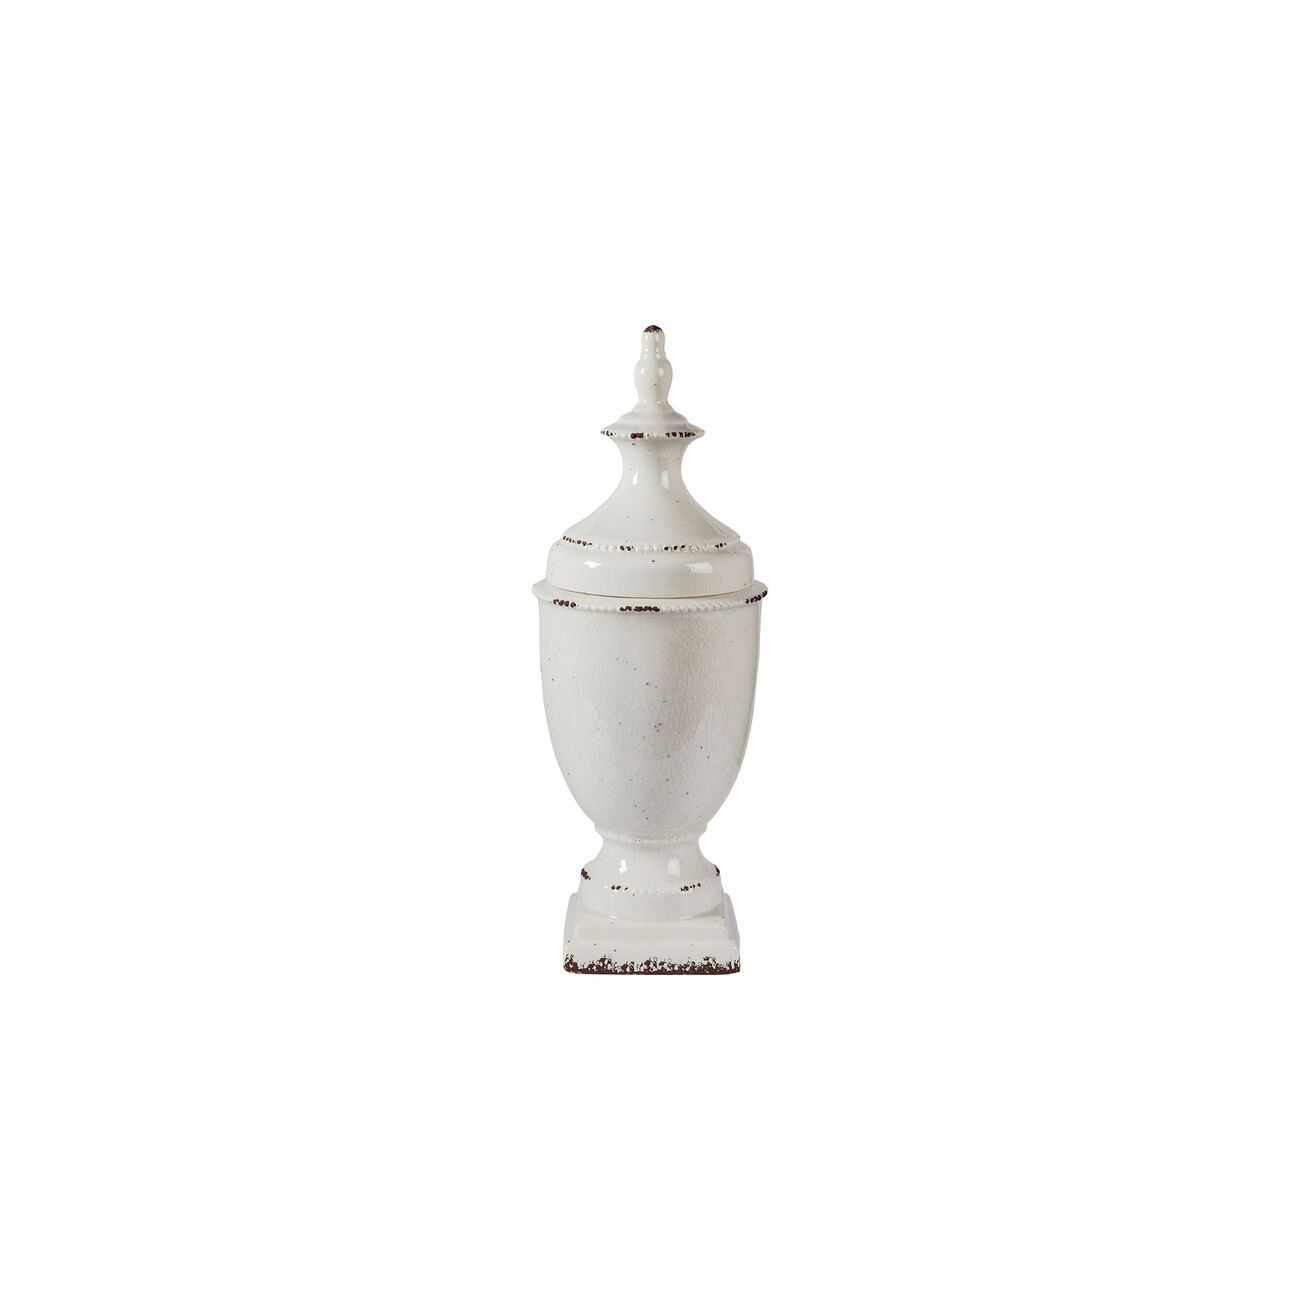 Vase Shape Lidded Jar with Finial Top and Pedestal Base, Antique White